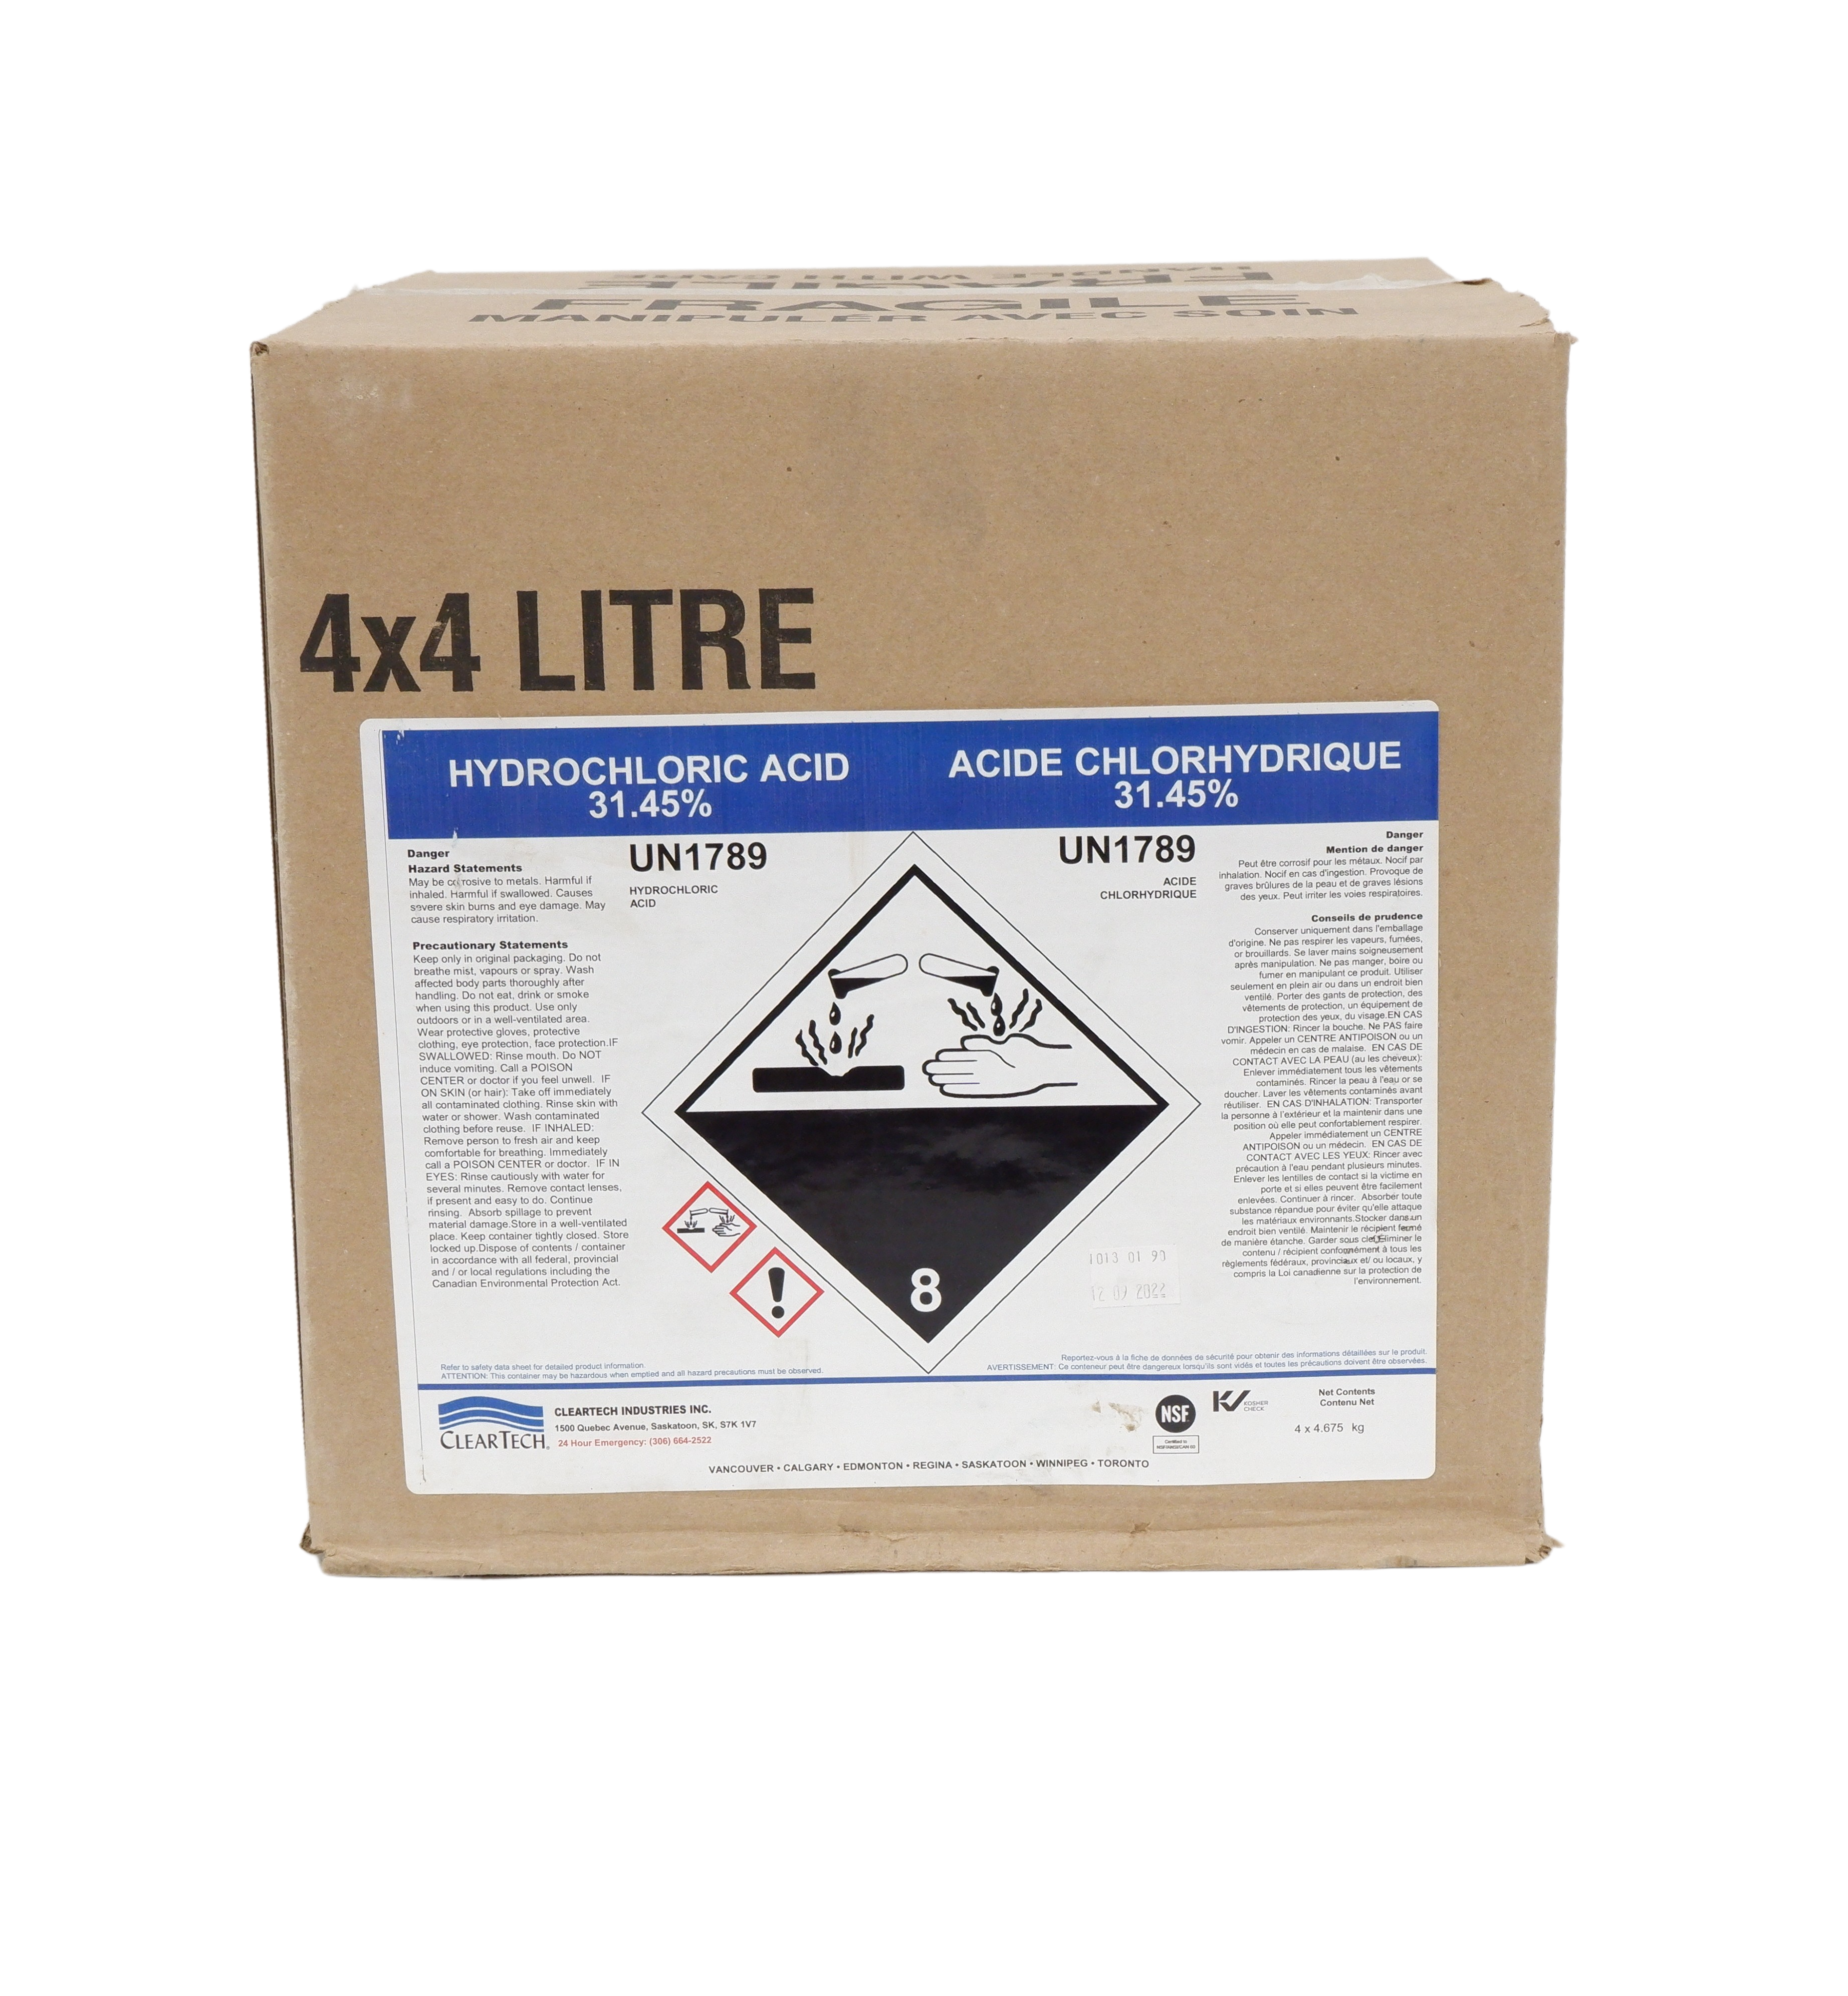 Hydrochloric Acid (Muriatic Acid) - 31.45% - NSF Certified - Case of 4X4L Jugs